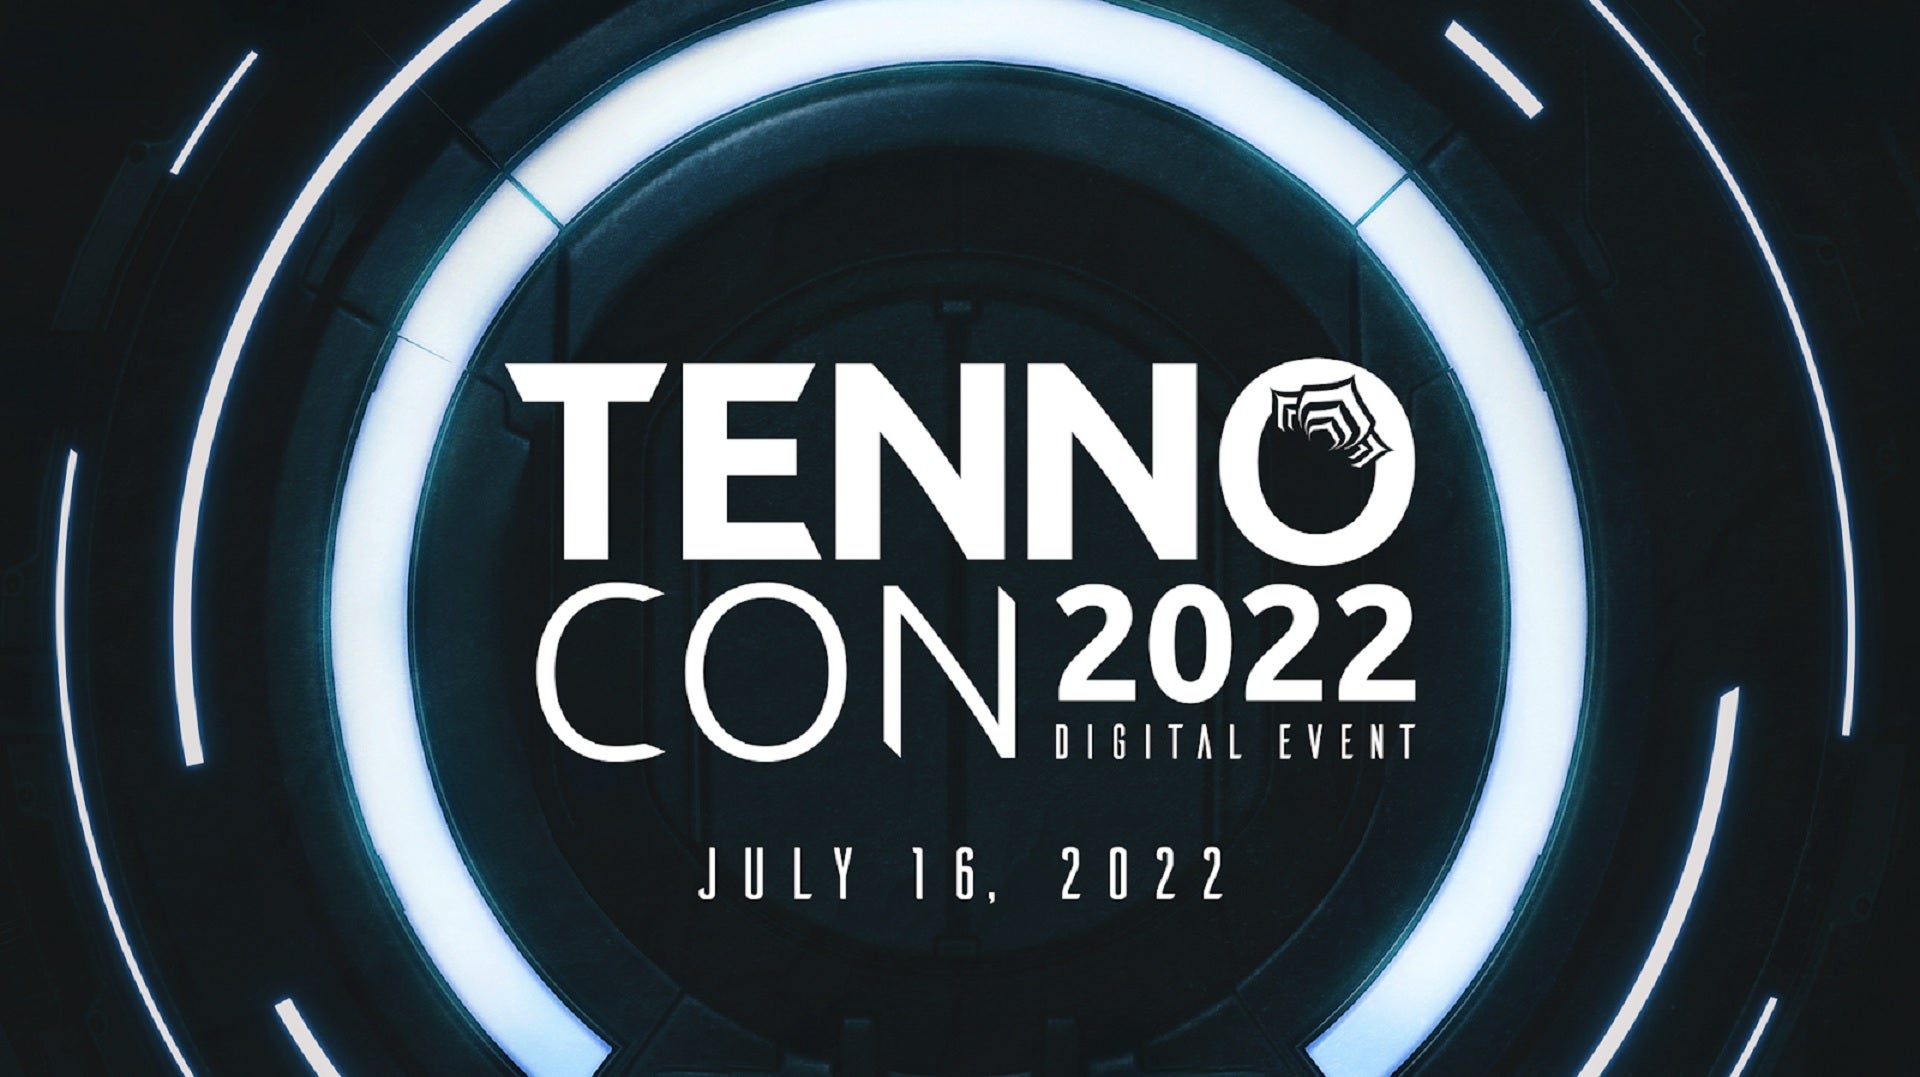 The Tennocon announcement header for 2022